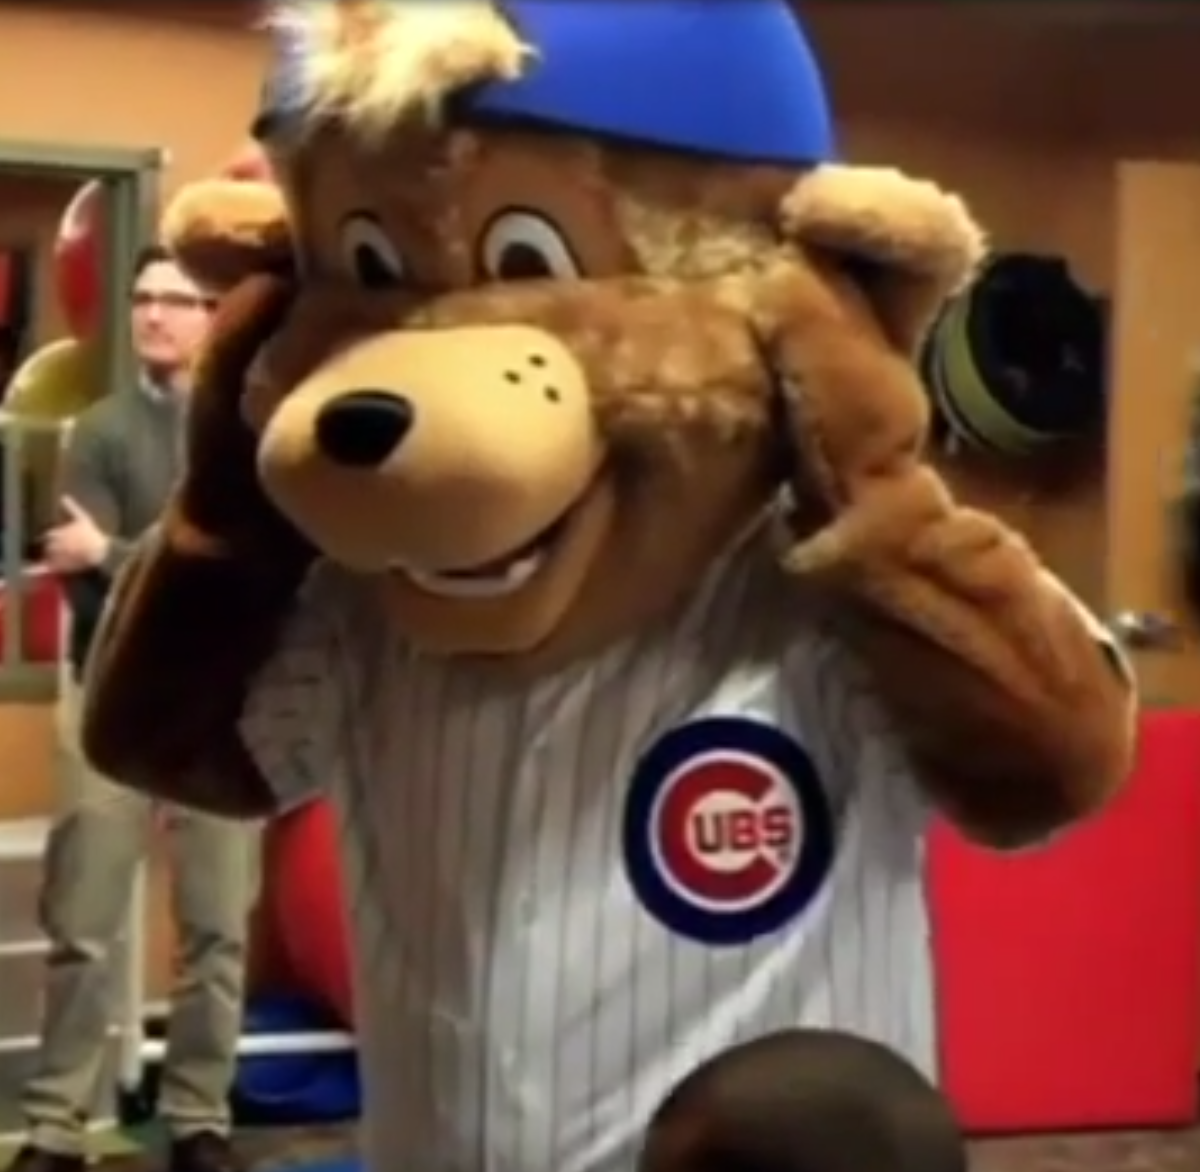 Chicago Cubs Mascot Clark Shirt - Shibtee Clothing